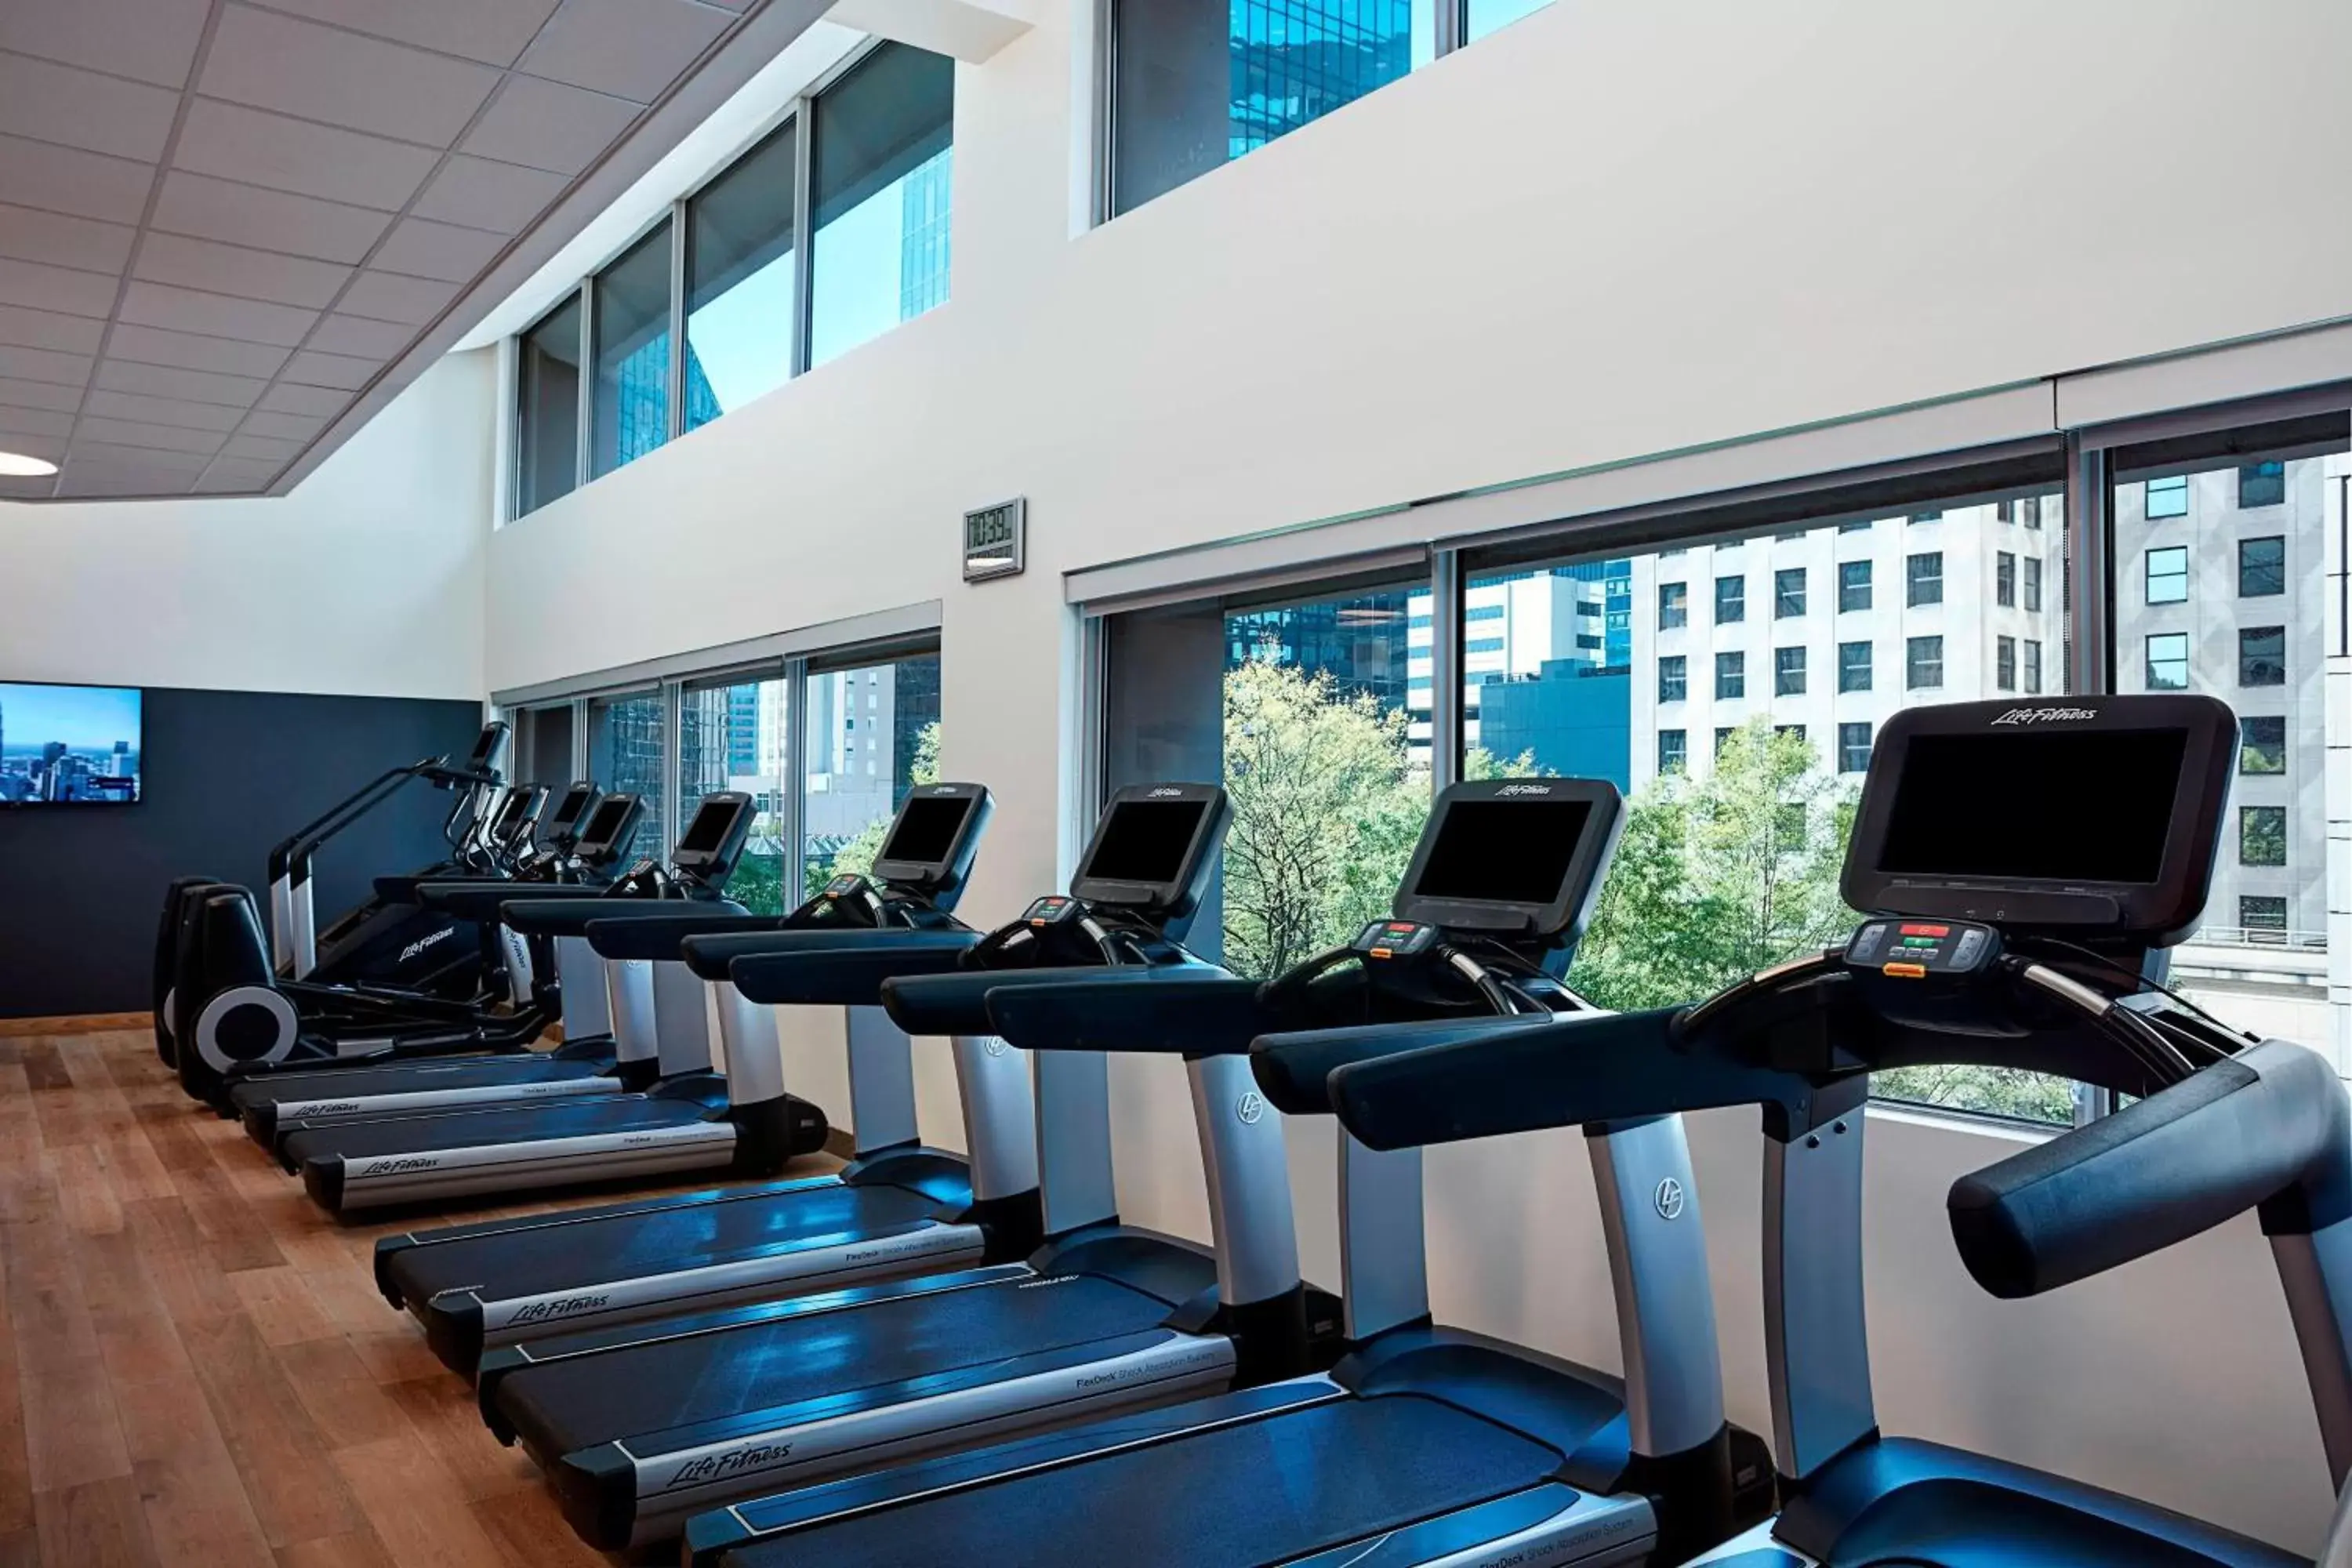 Fitness centre/facilities, Fitness Center/Facilities in Charlotte Marriott City Center